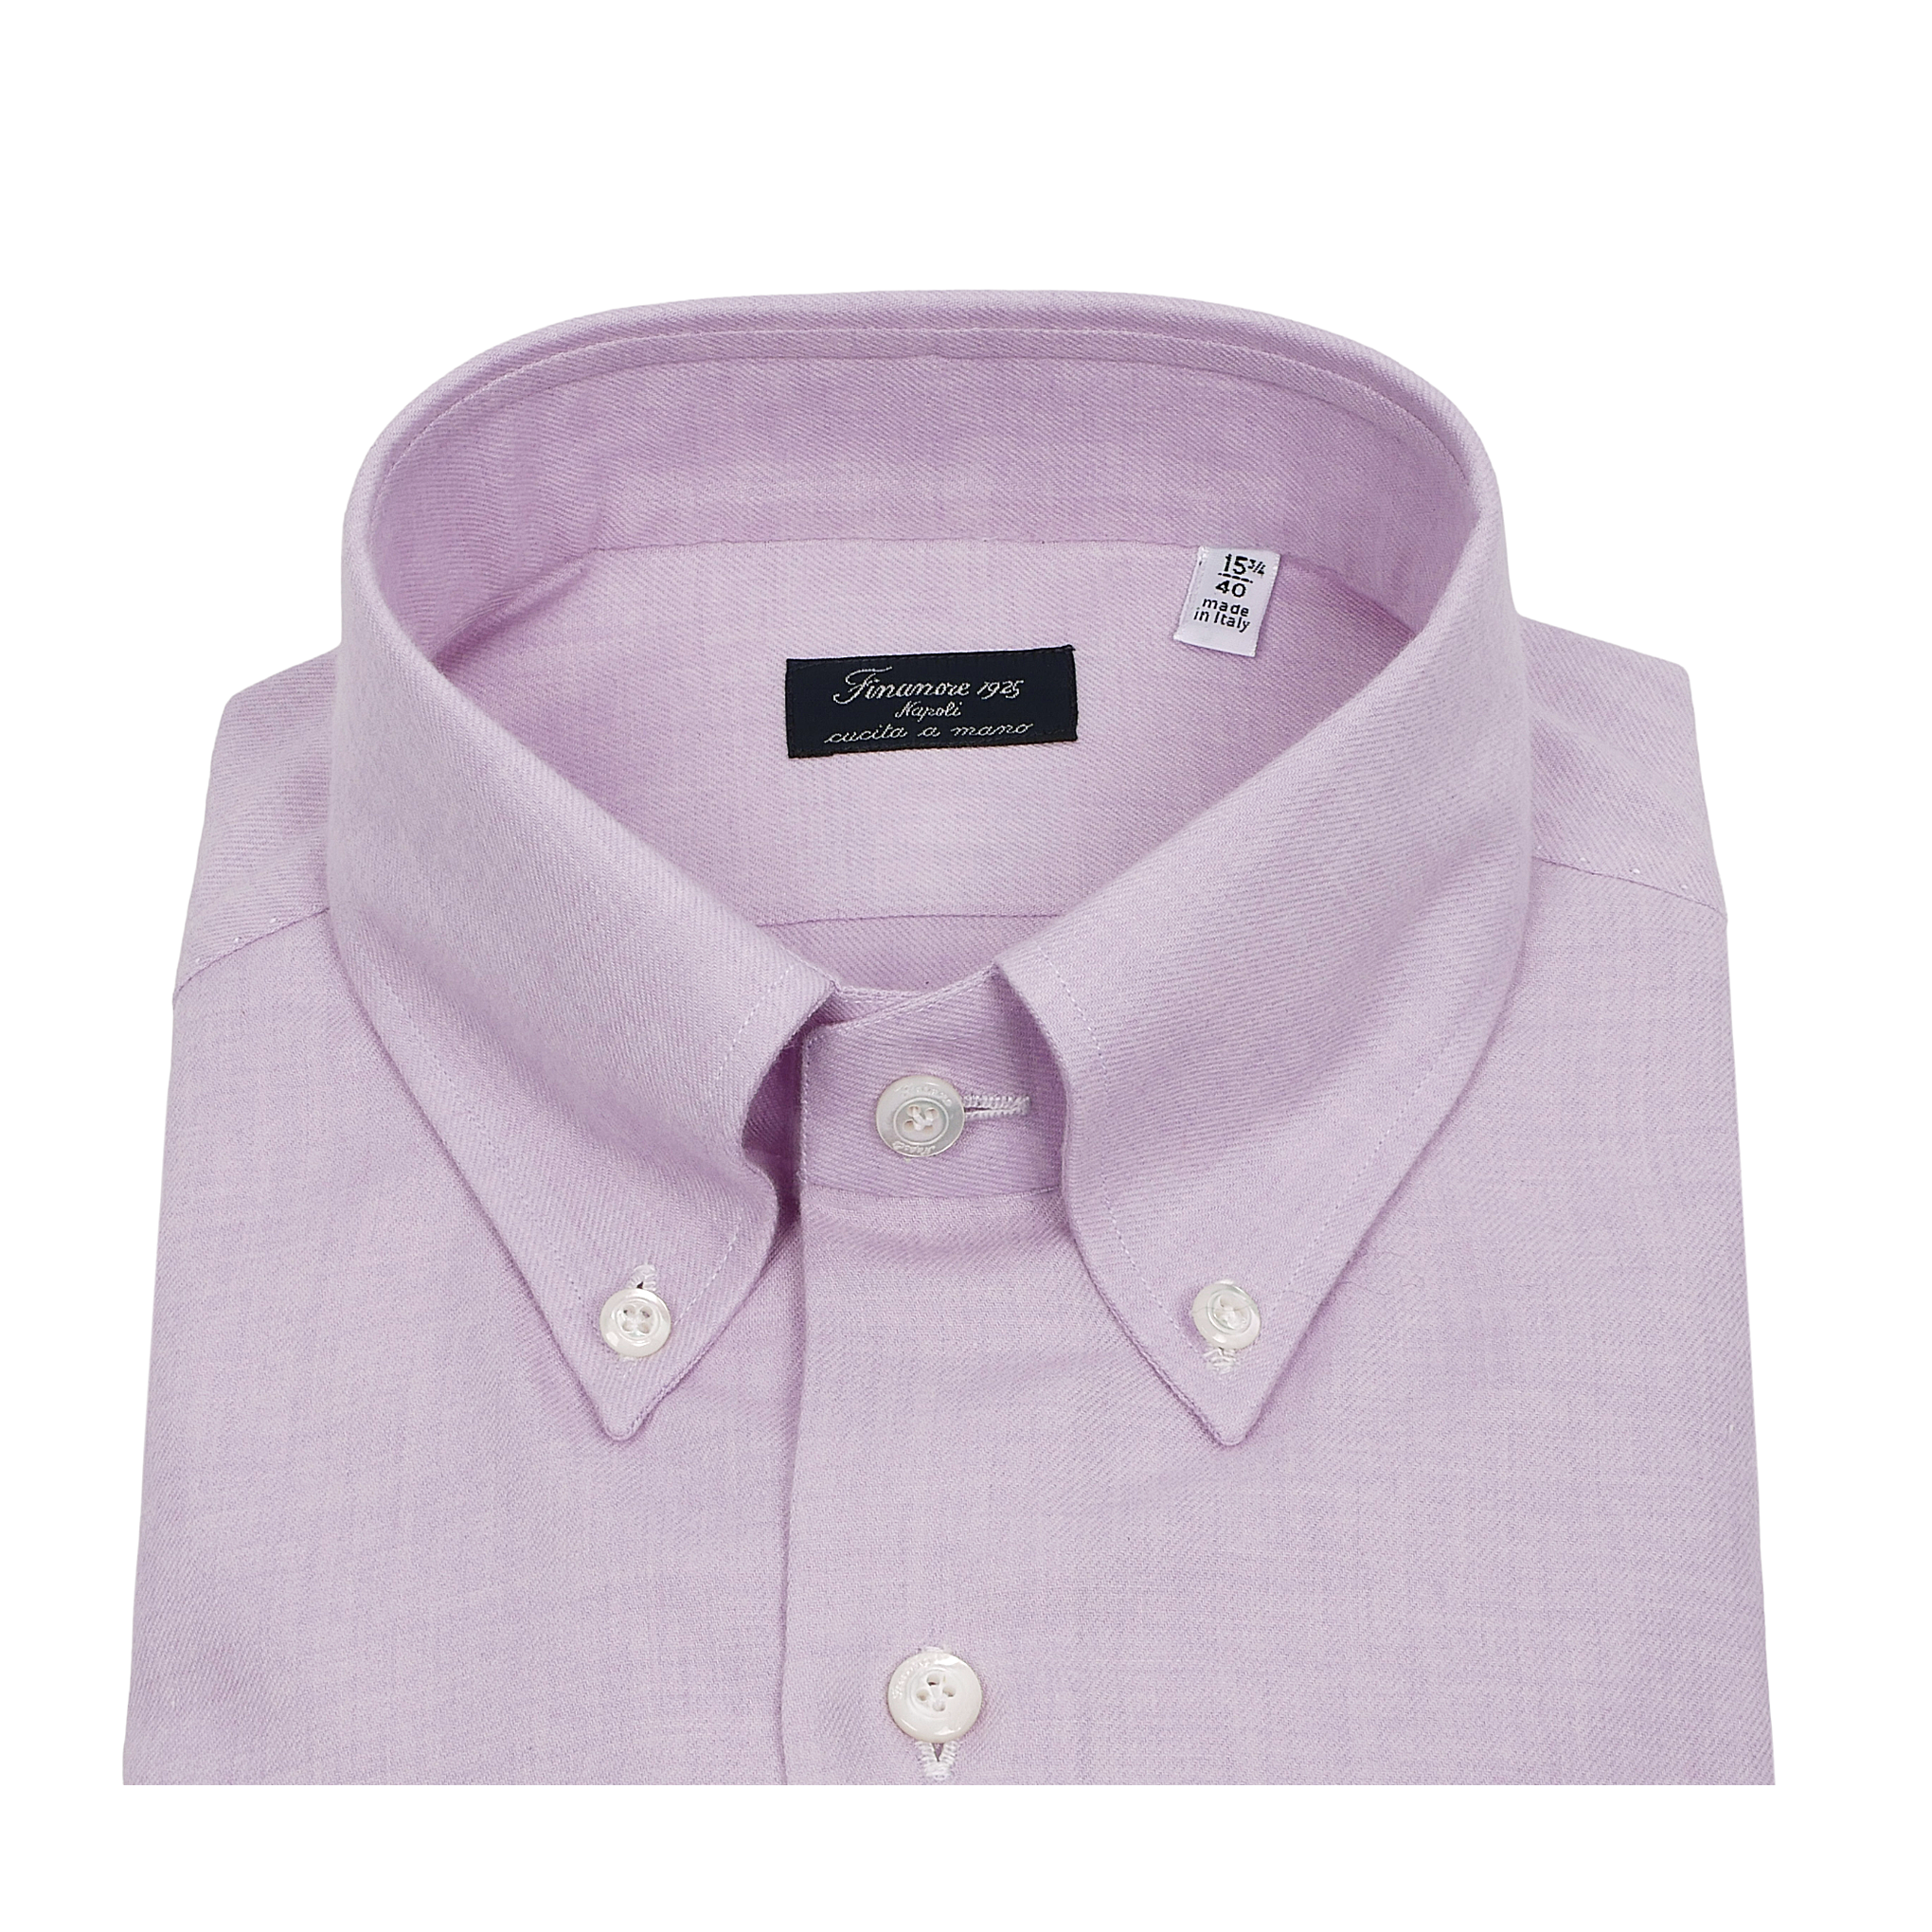 Regular fit shirt Napoli flannel light violet cotton and cashmere